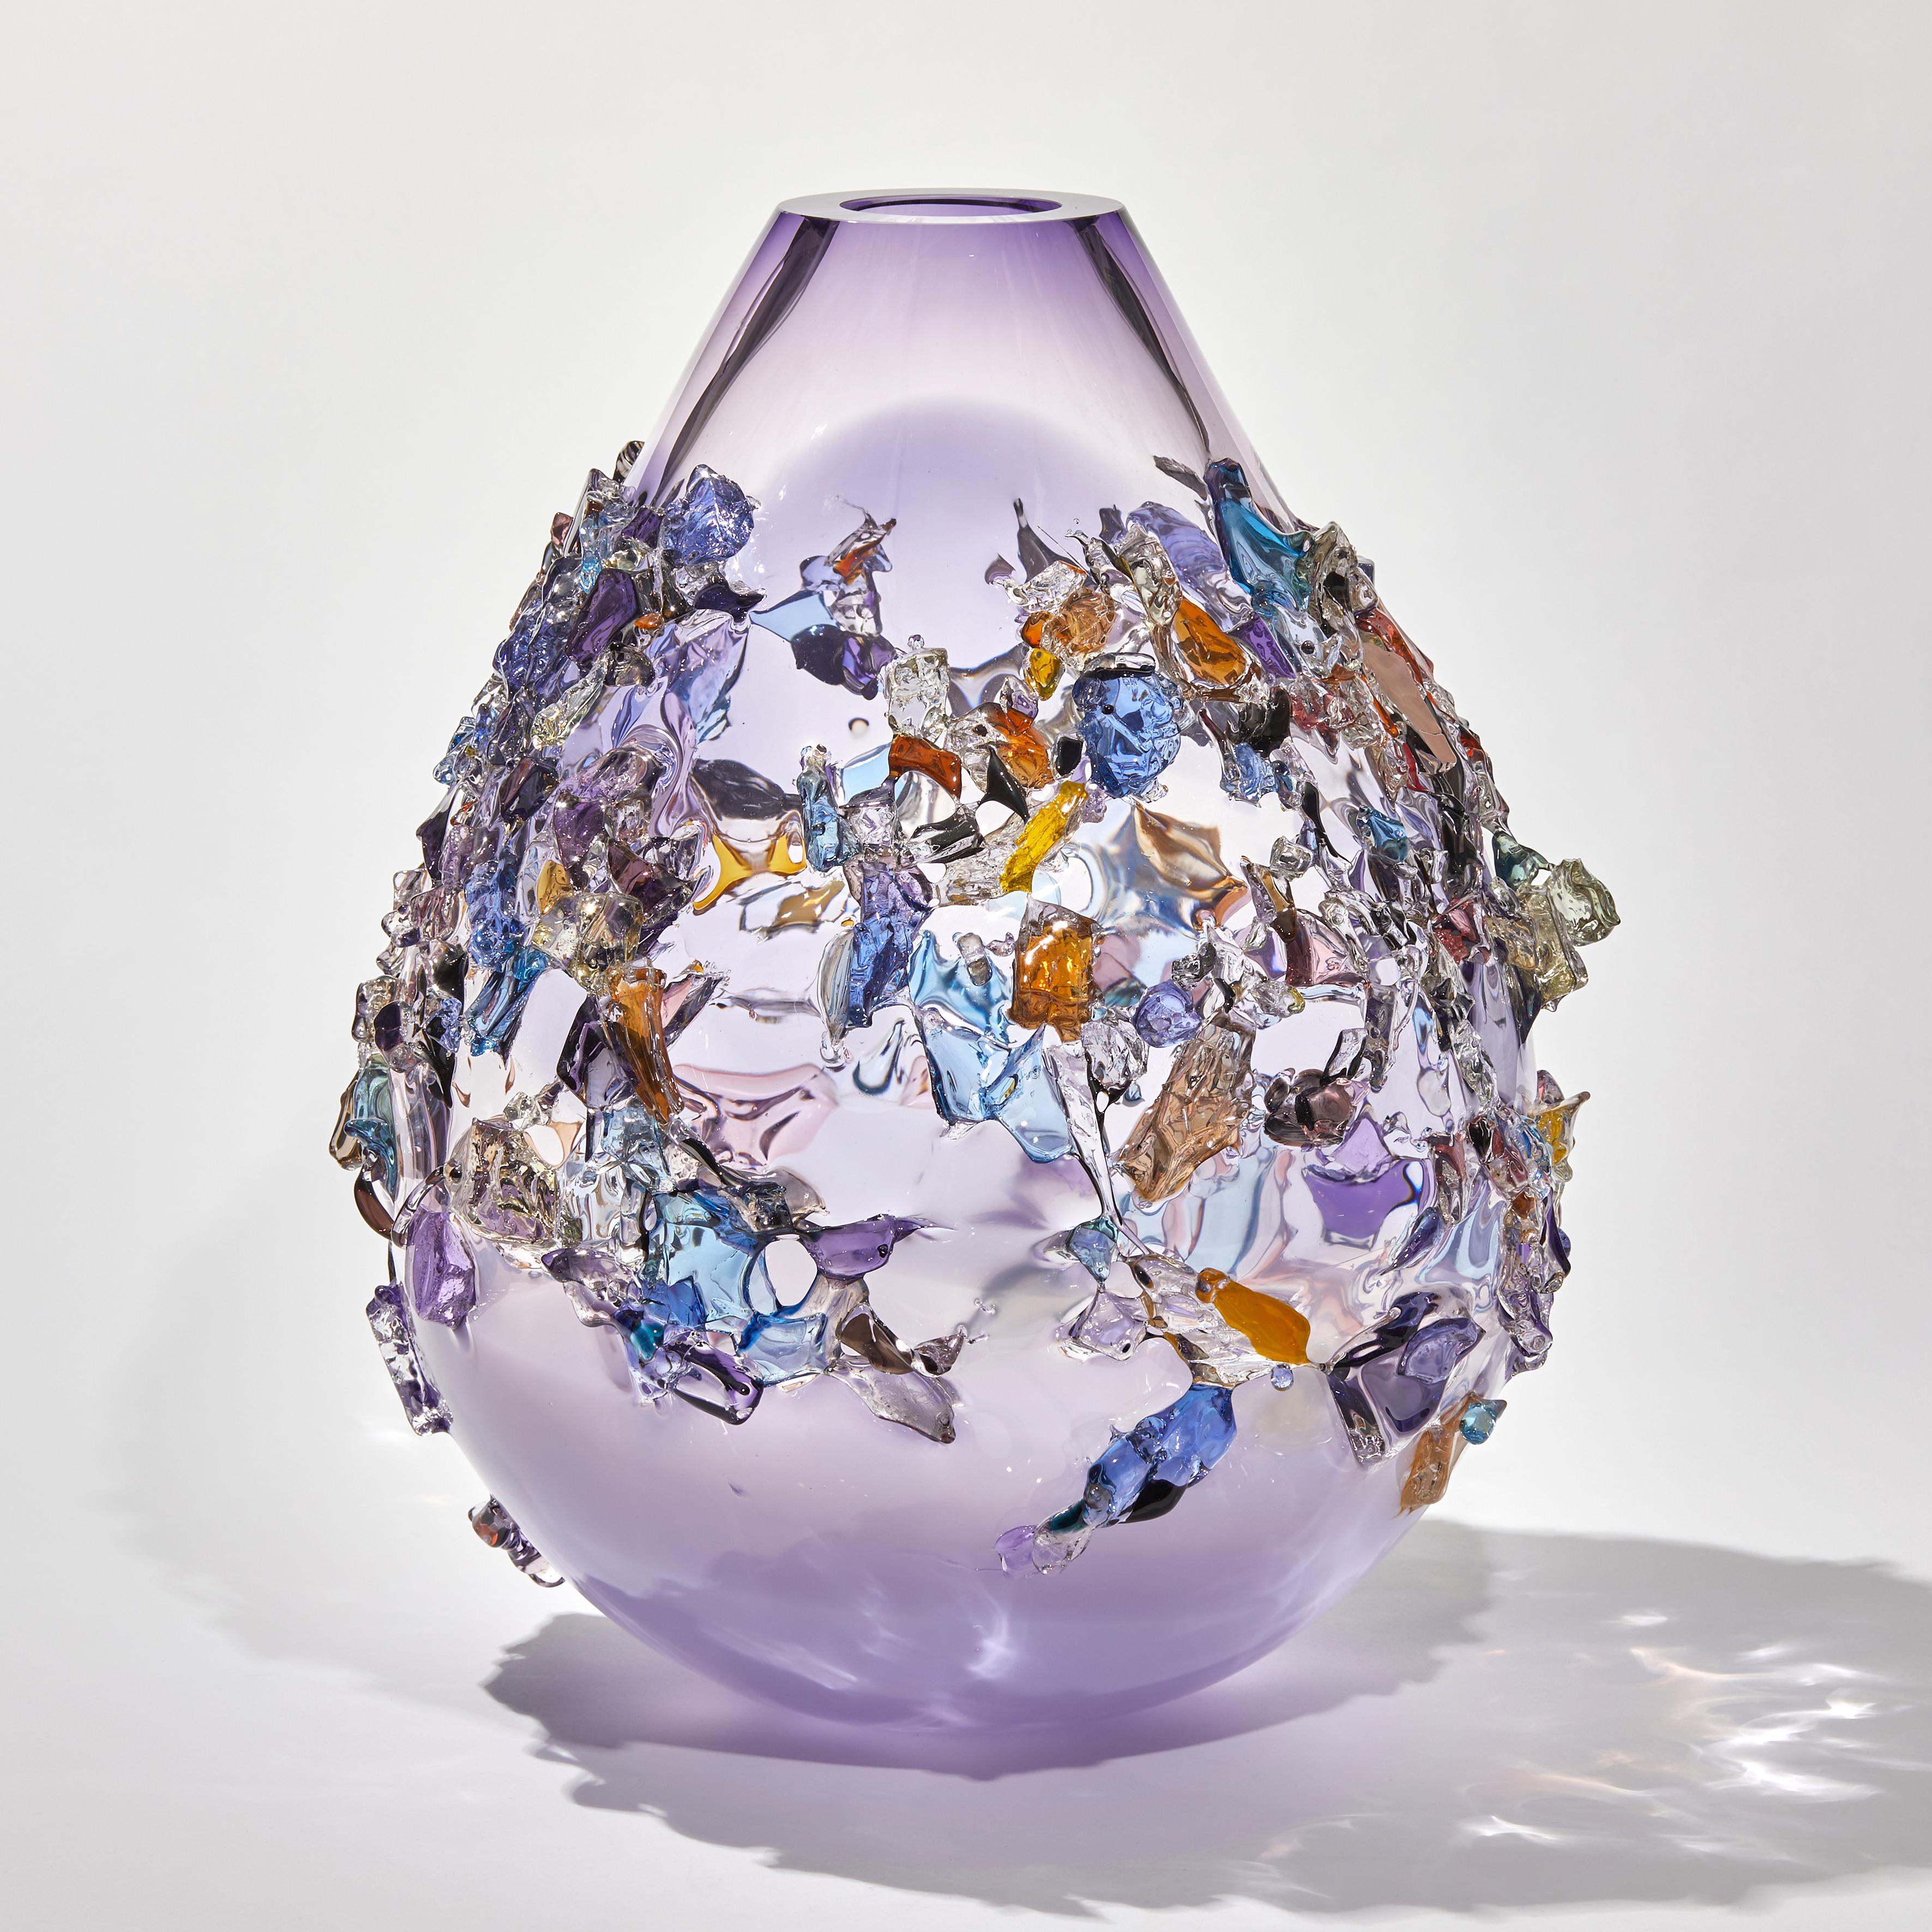 Organic Modern Sakura TRP21001, a Glass Vase in Lilac with Mixed Colors by Maarten Vrolijk